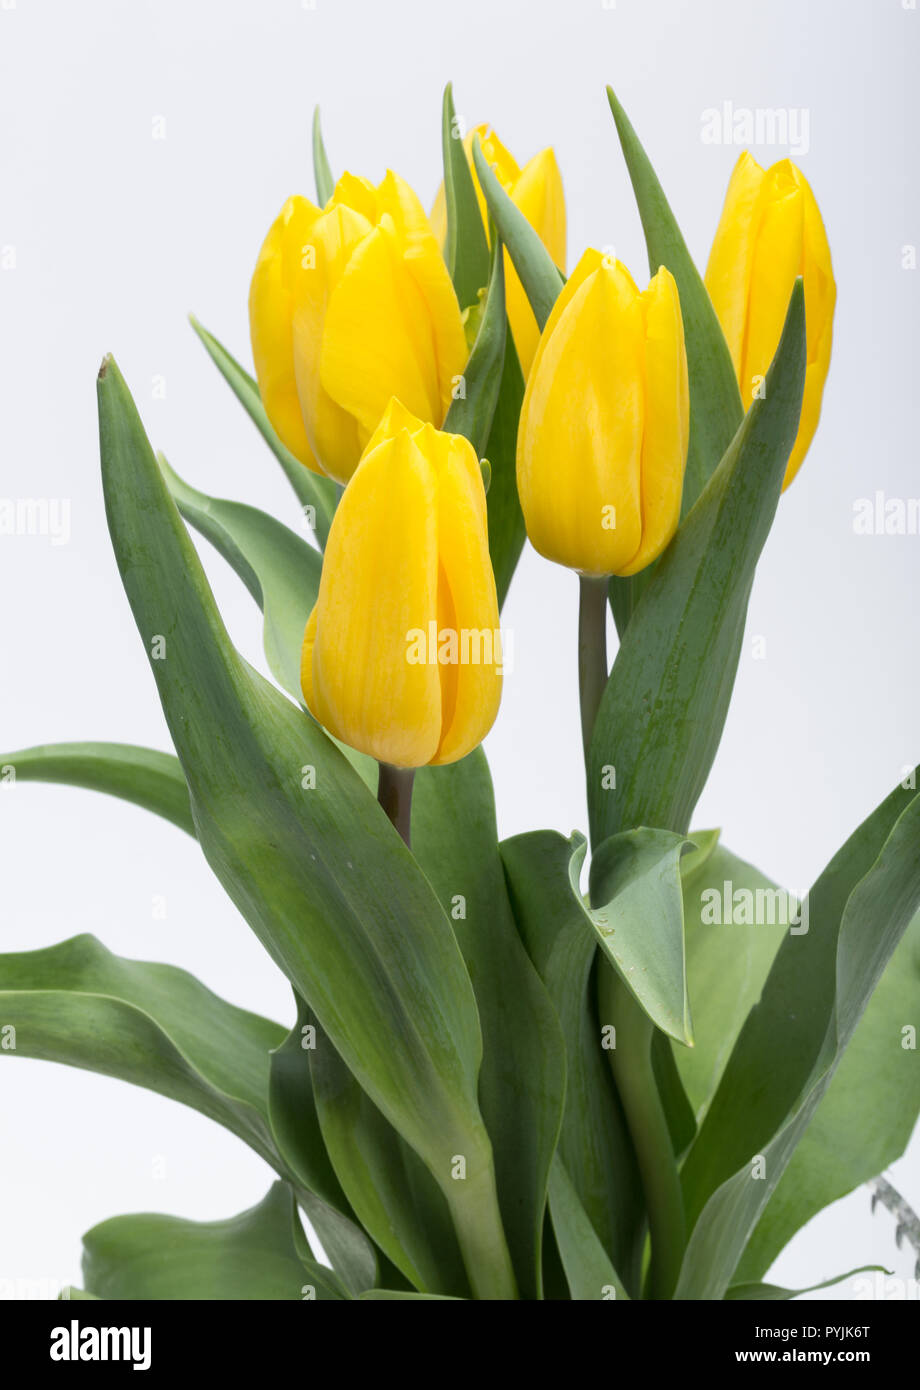 Mazzo di fiori di tulipani gialli Foto stock - Alamy